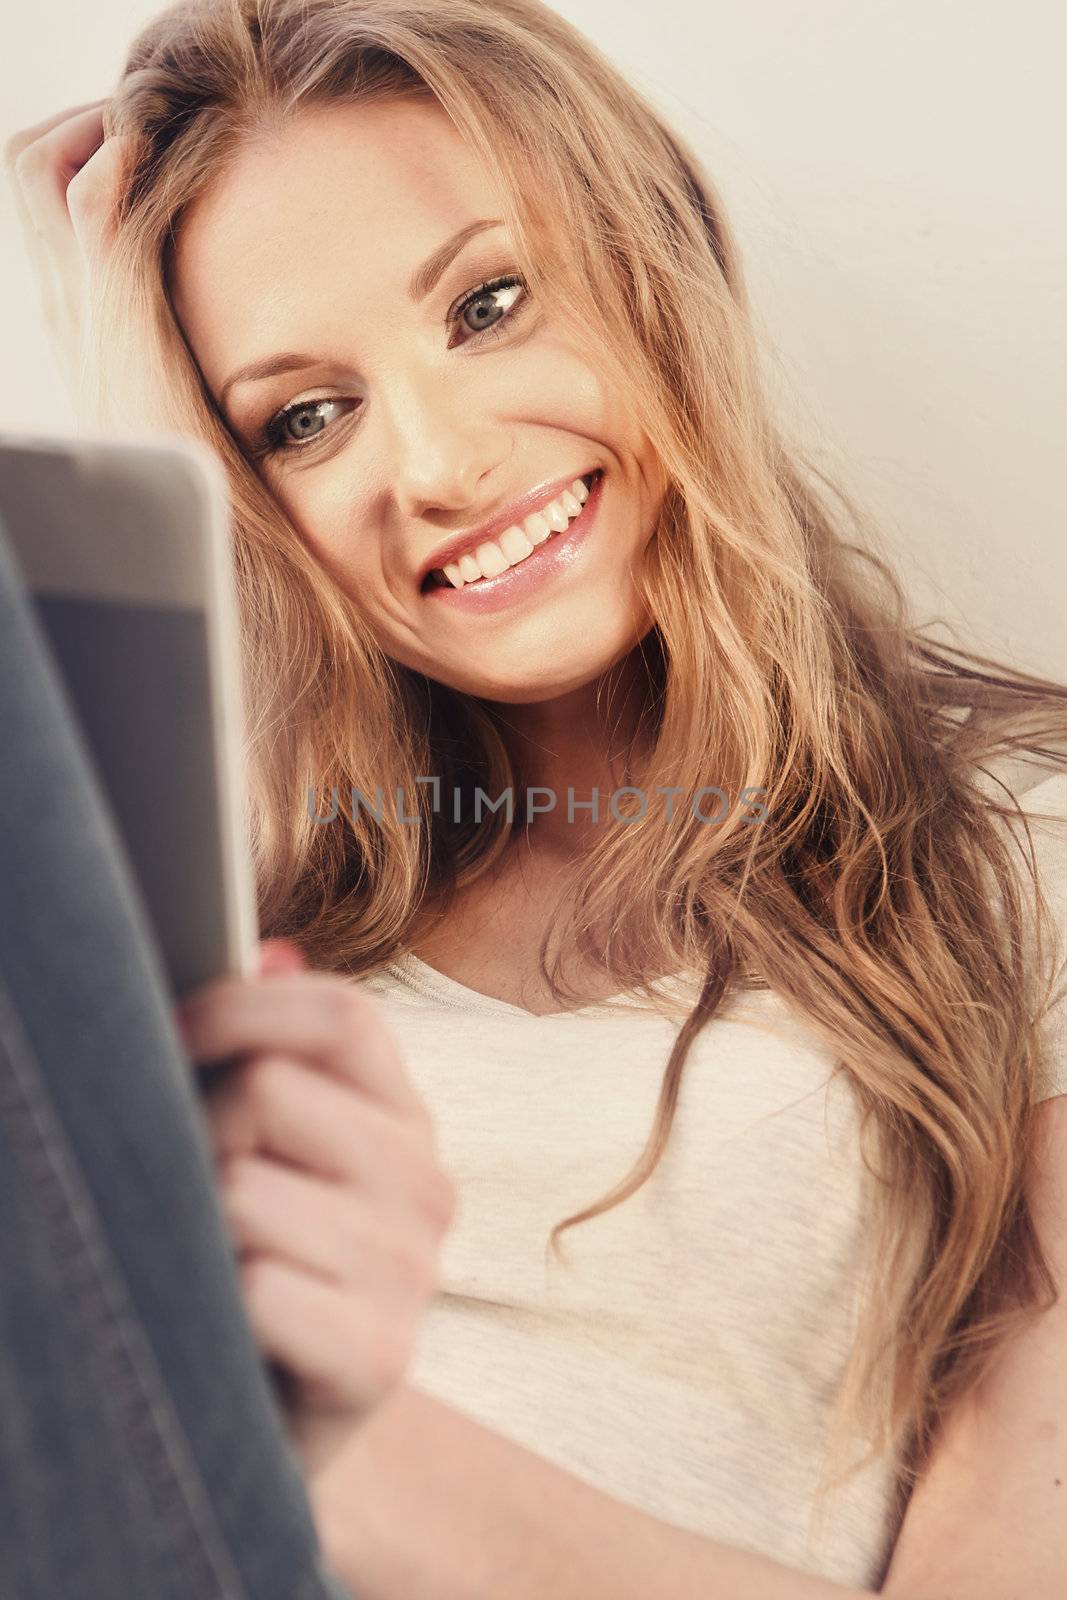 Beautiful girl reading e-book